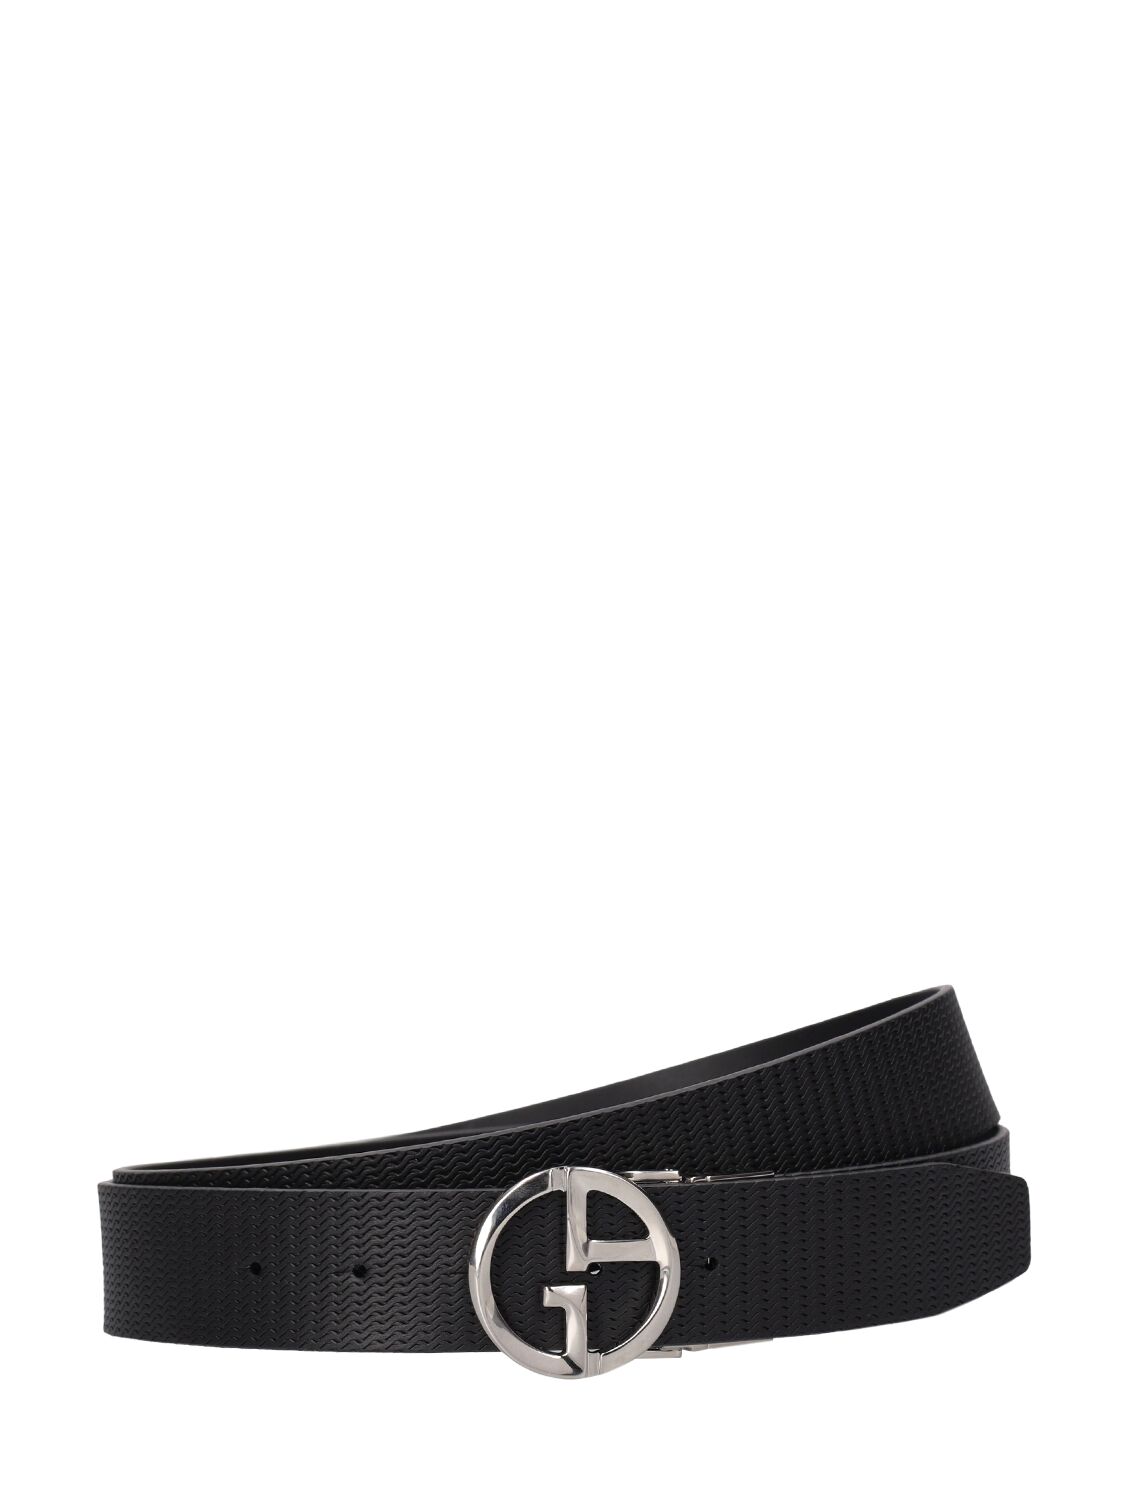 Image of Ga Buckle Reversible Leather Belt